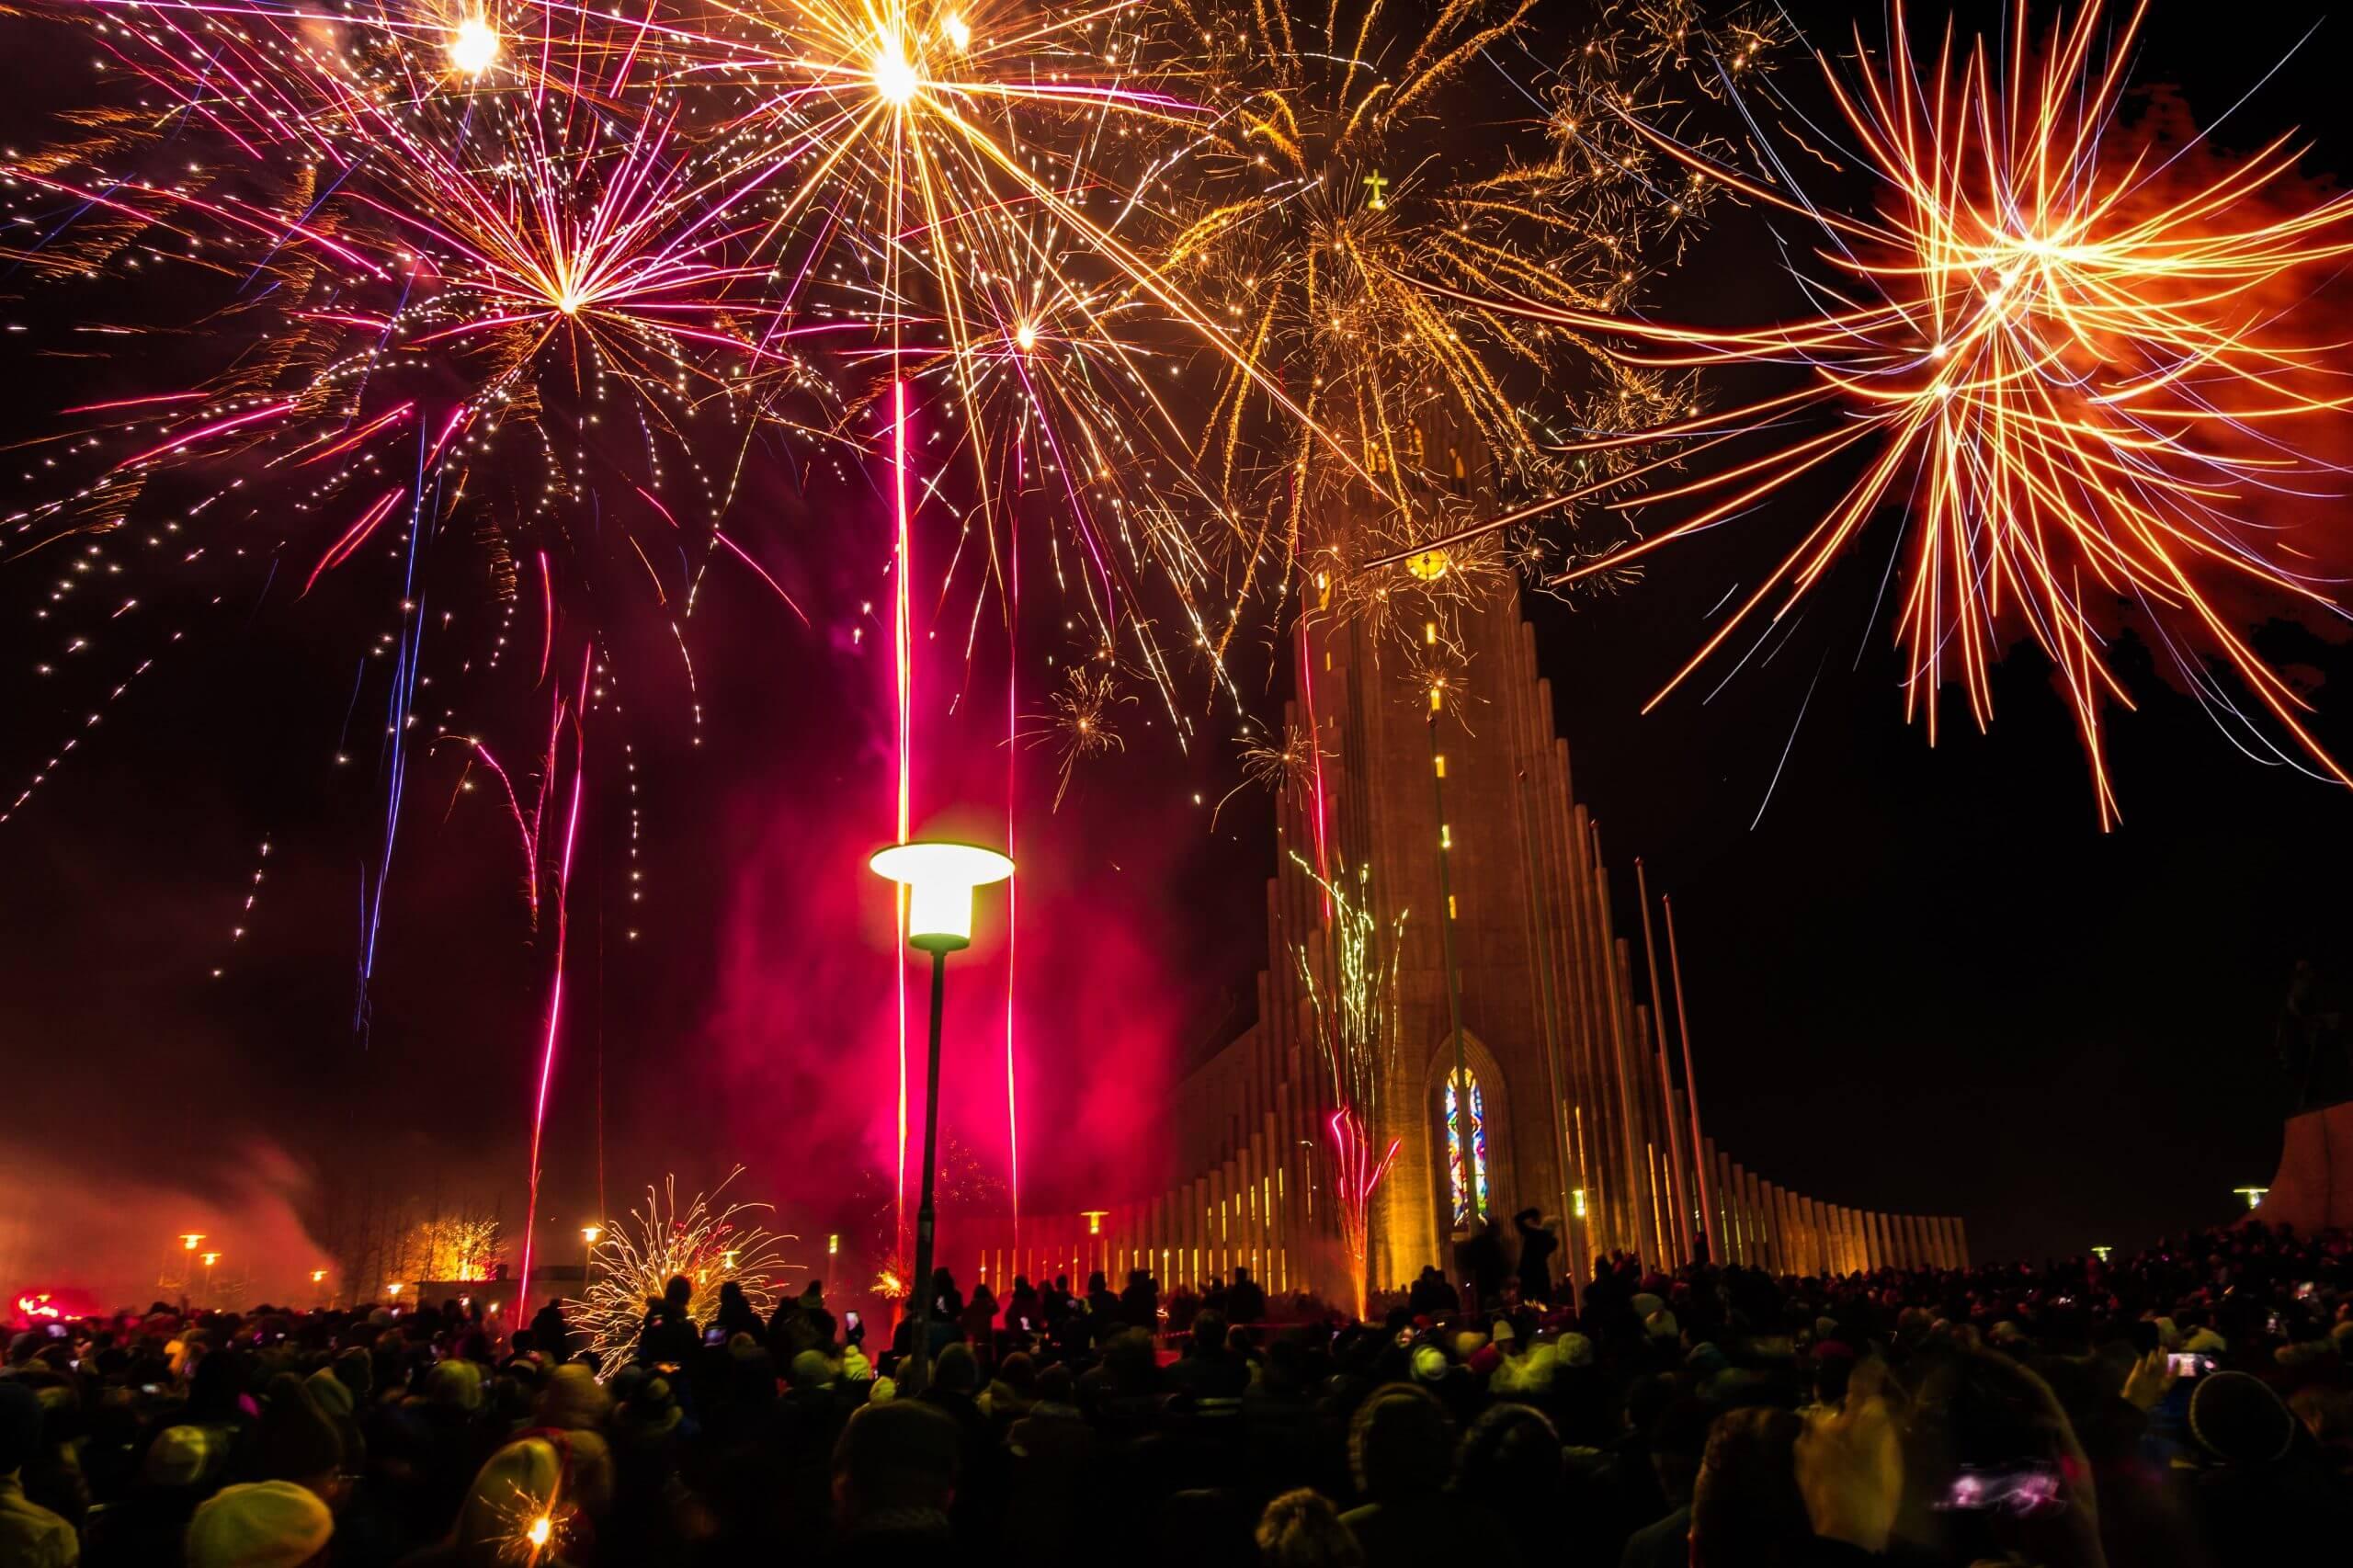 Festival of fireworks in front of Reykjavik church